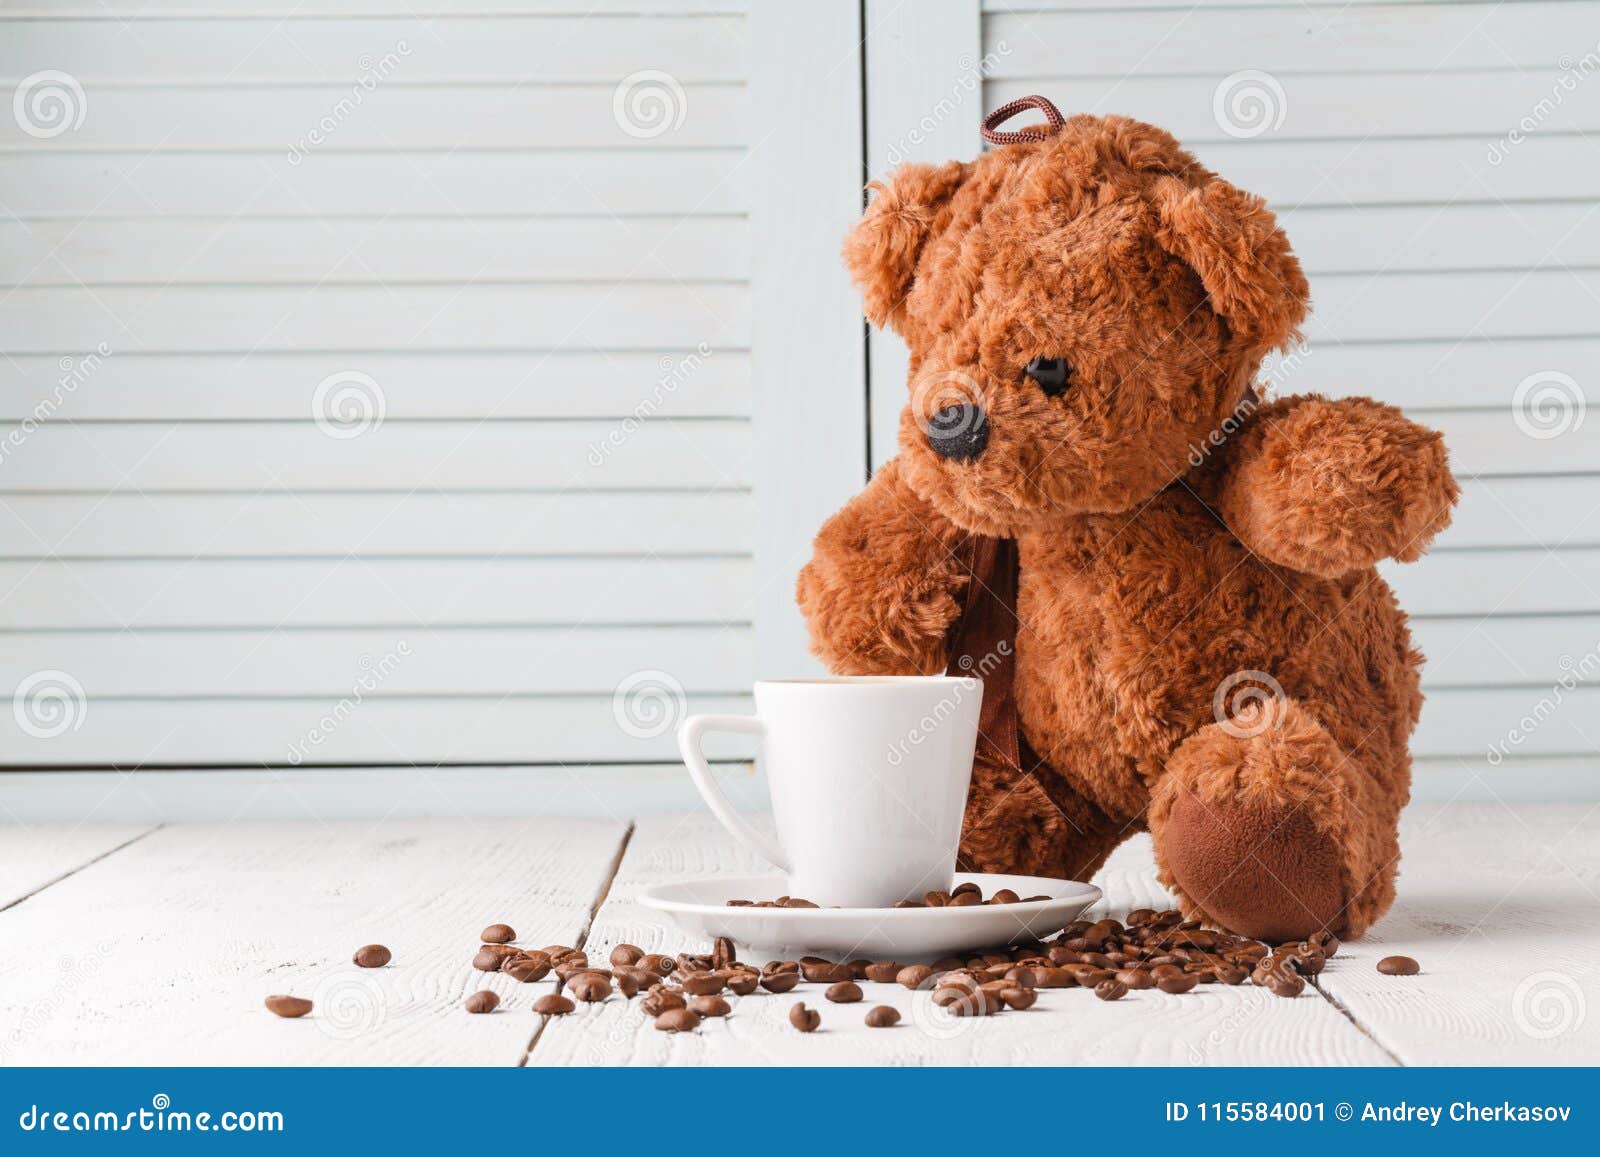 Good Morning with Teddy Bear Stock Image - Image of breakfast, caffeine ...